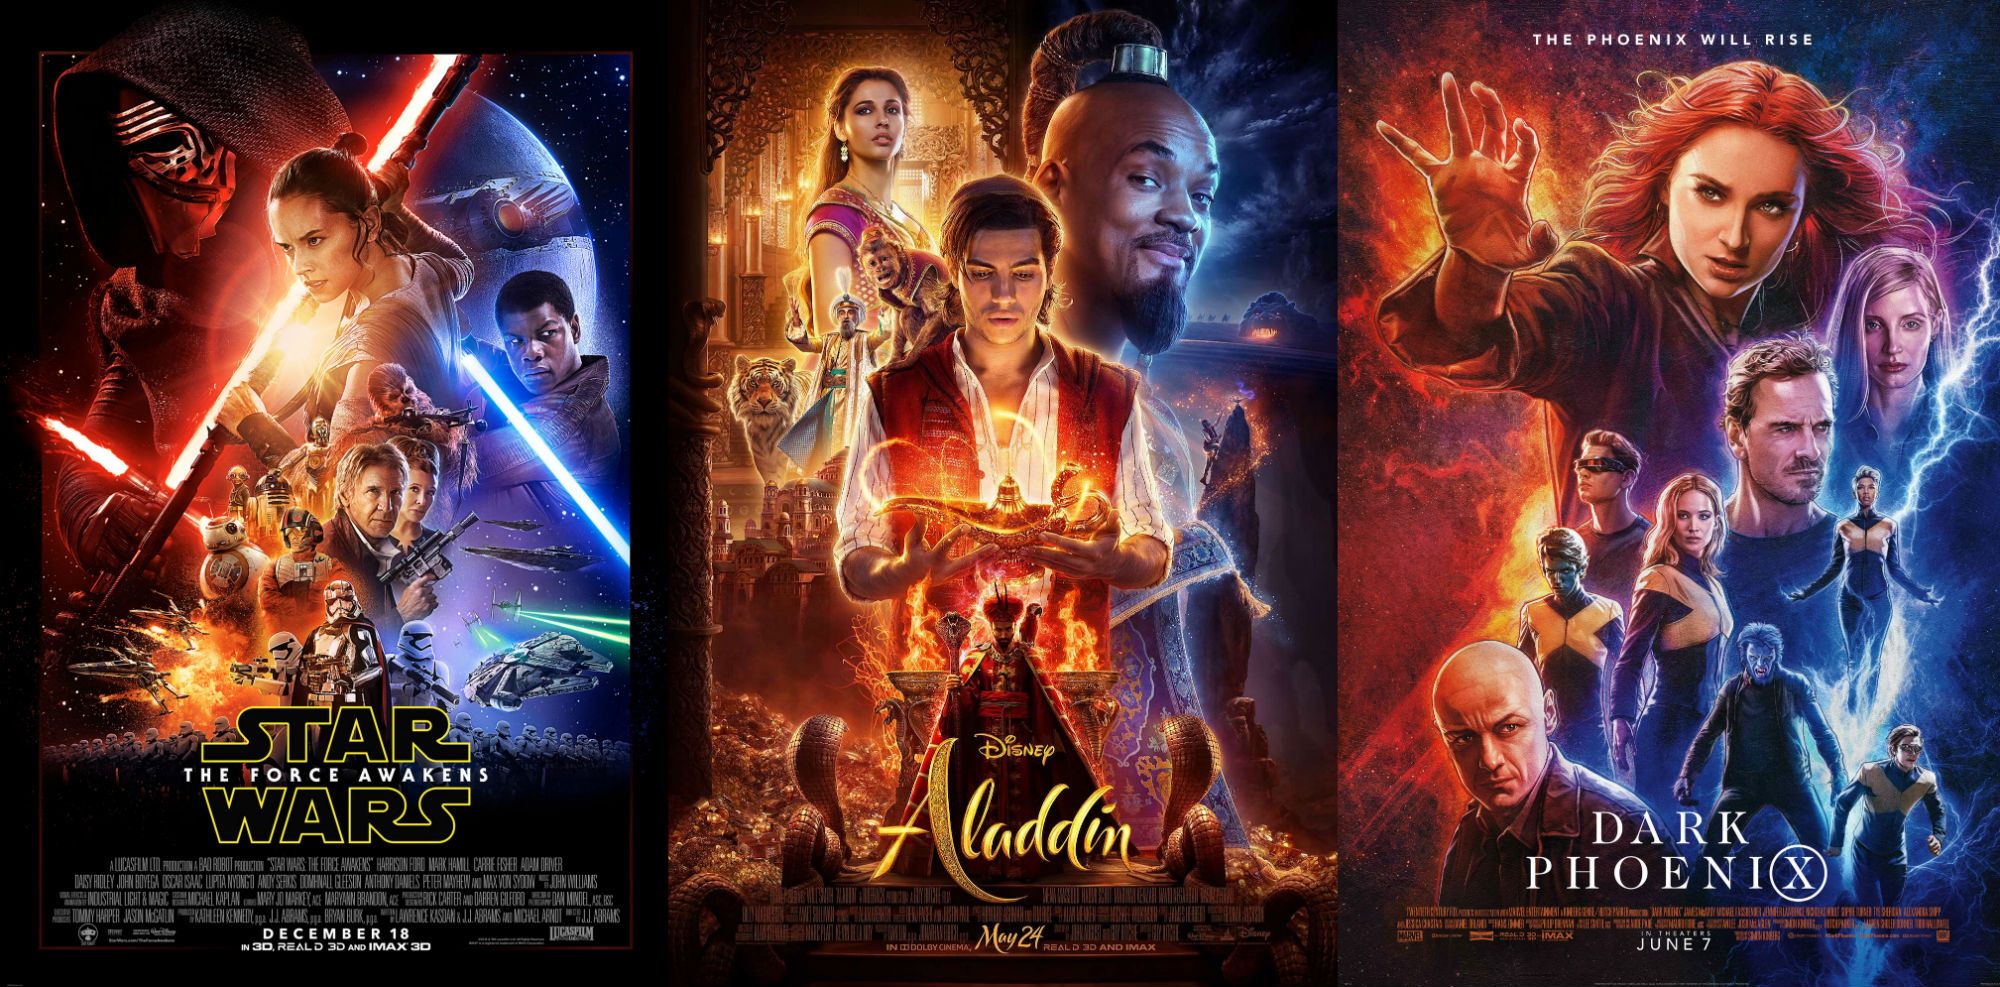 Star Wars The Force Awakens Aladdin Dark Phoenix movie posters are very similar